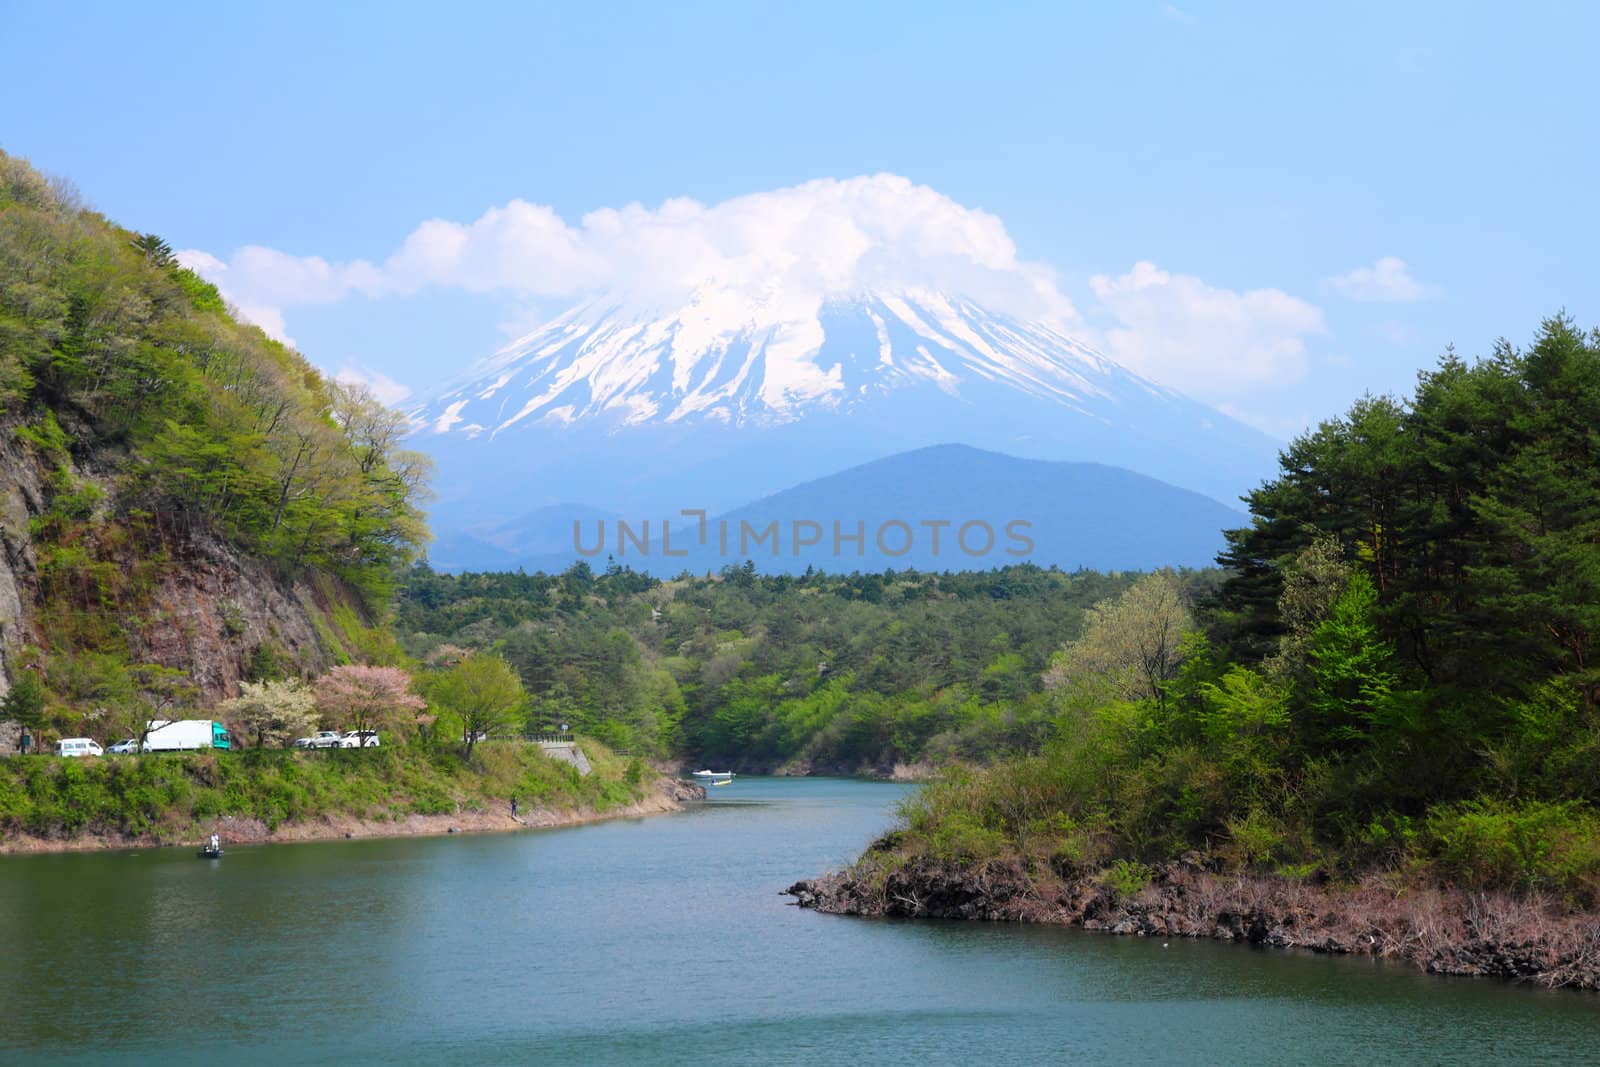 Japan landscape with Mount Fuji - Lake Shoji (Shojiko) and the famous volcano. Part of Fuji Five Lakes in Fuji-Hakone-Izu National Park